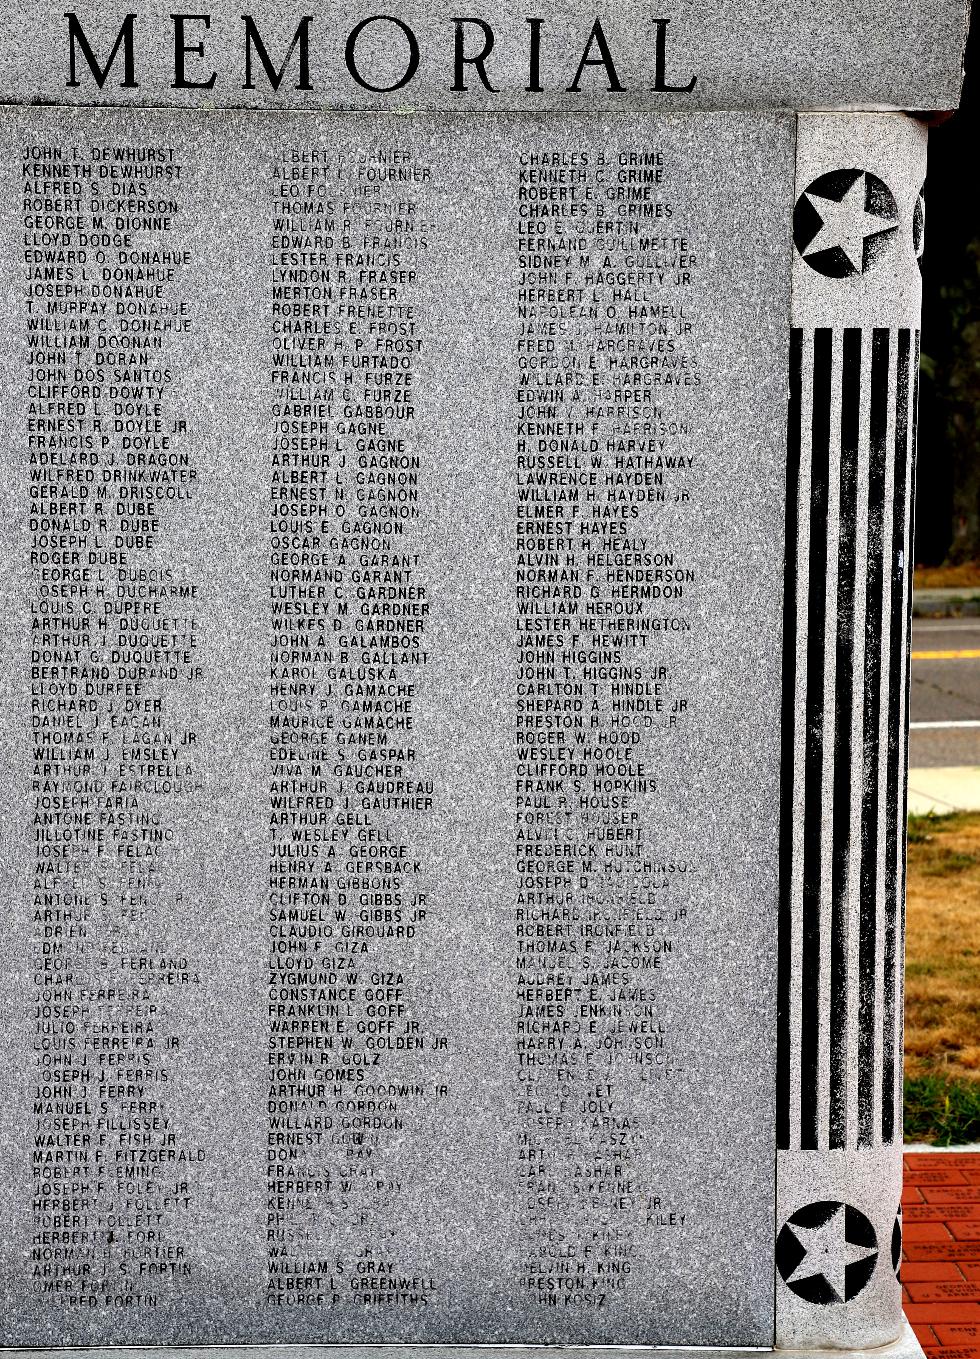 Somerset Massachusetts World War II Veterans Memorial